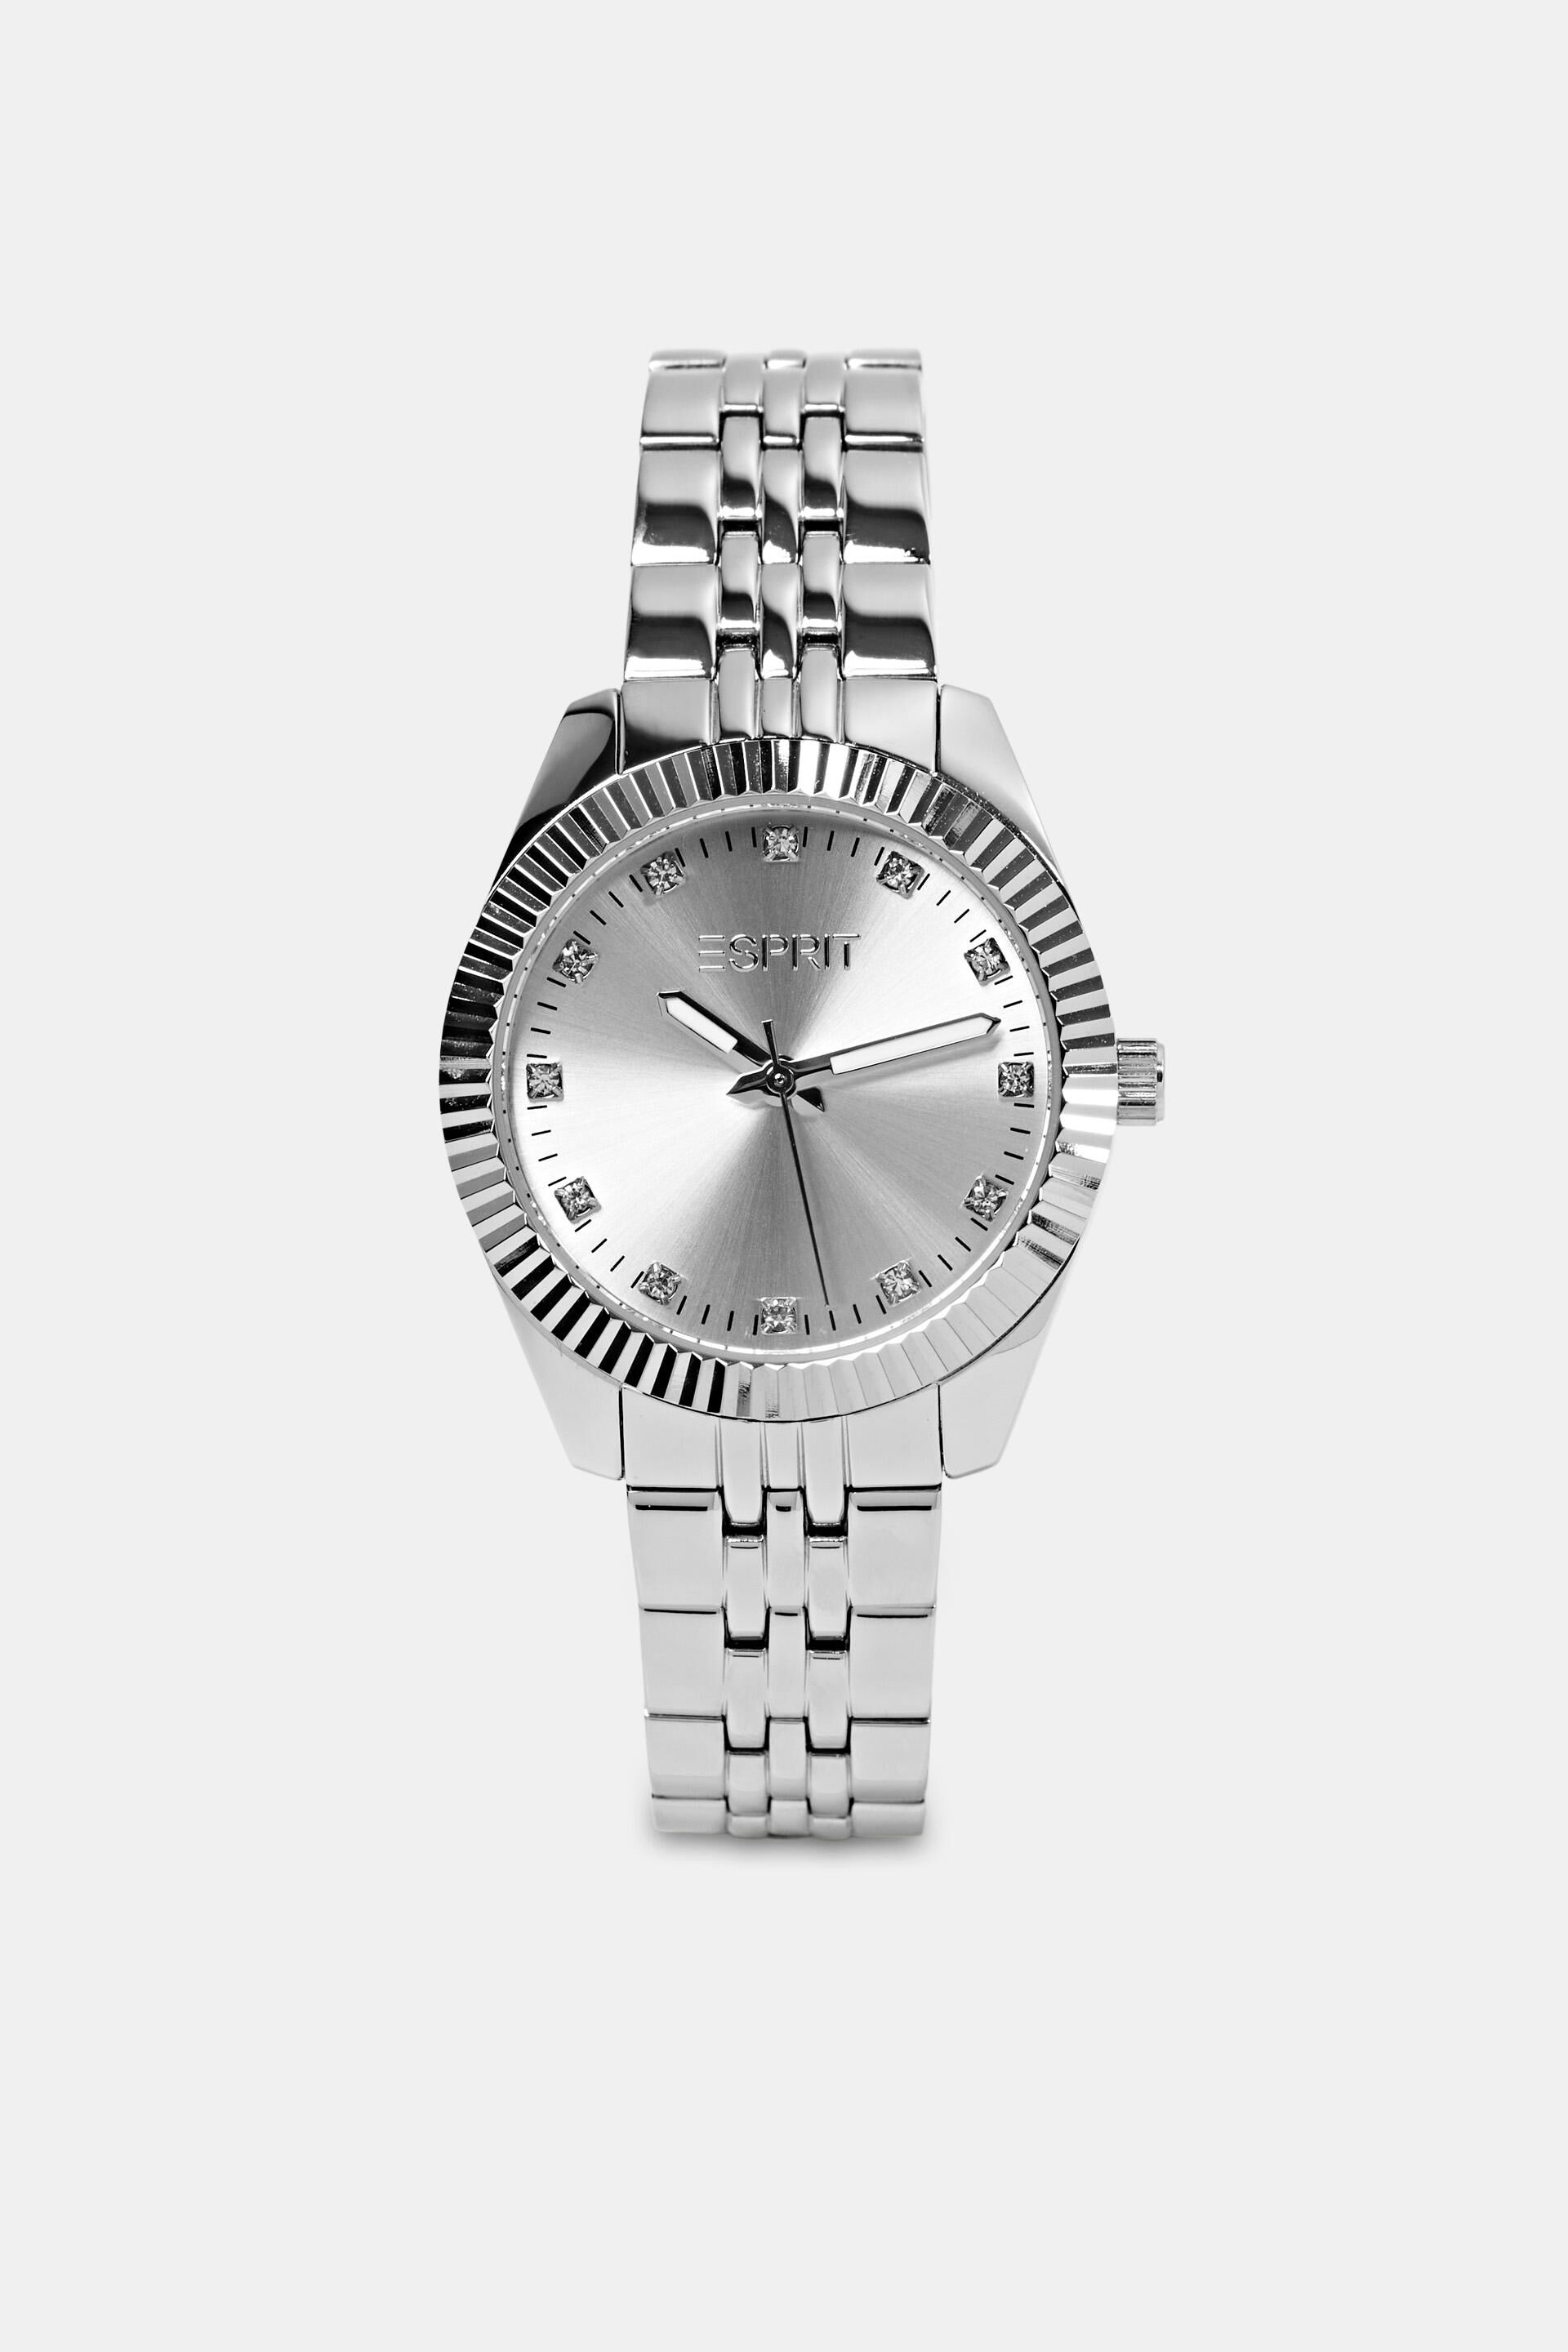 Esprit Online Store Stainless steel watch with zirconia